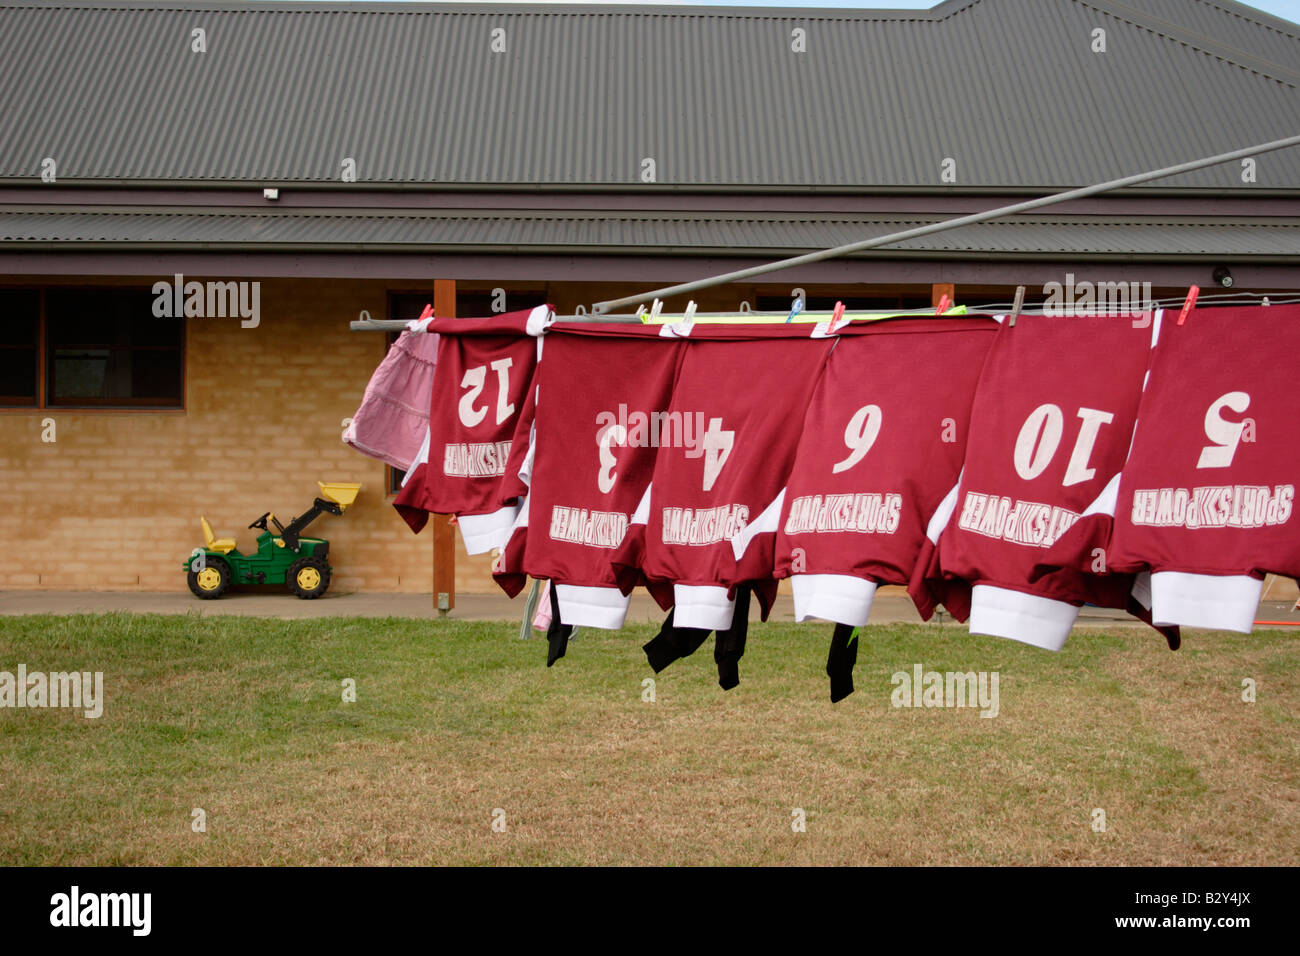 Football Shirts Drying on Washing Line New South Wales Australia Stock Photo